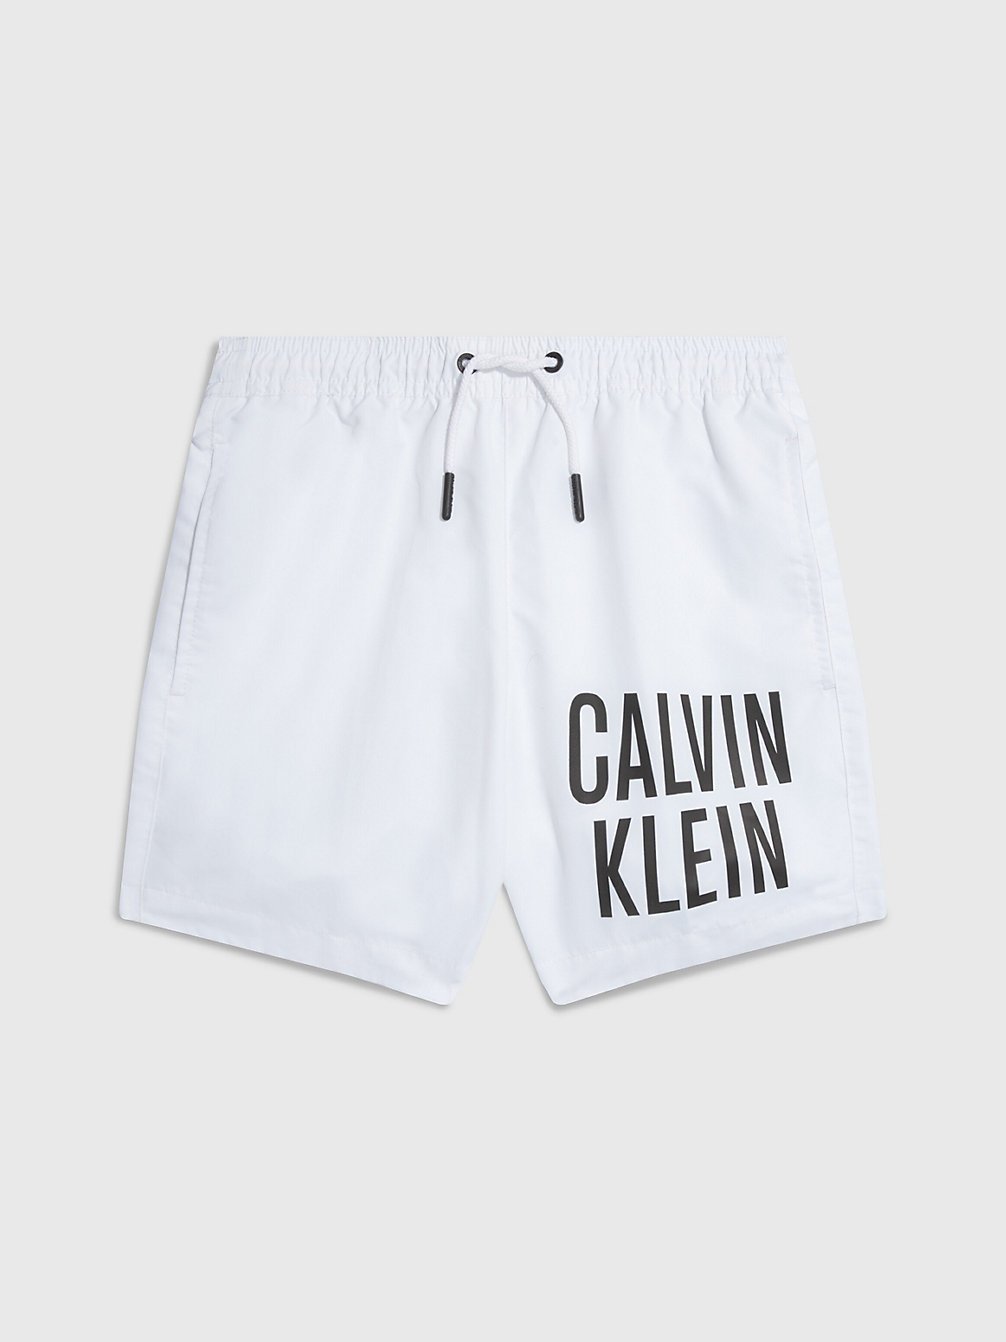 PVH CLASSIC WHITE Boys Swim Trunks - Intense Power undefined boys Calvin Klein